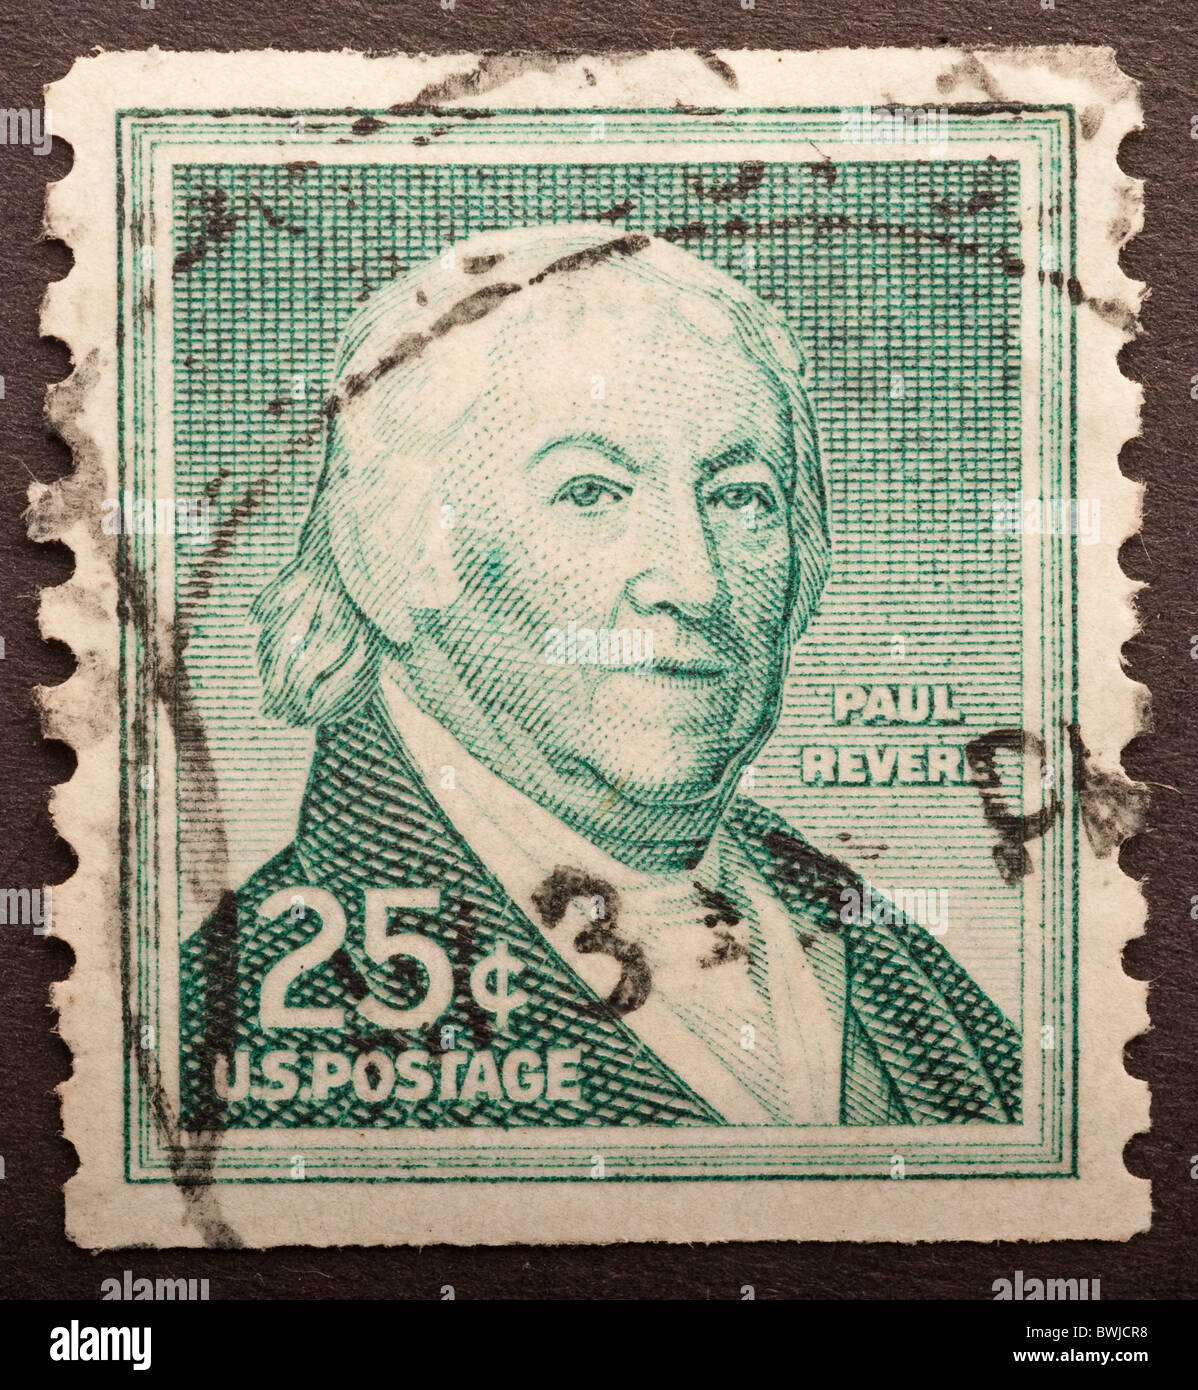 United States Postage 25 cents Stock Photo